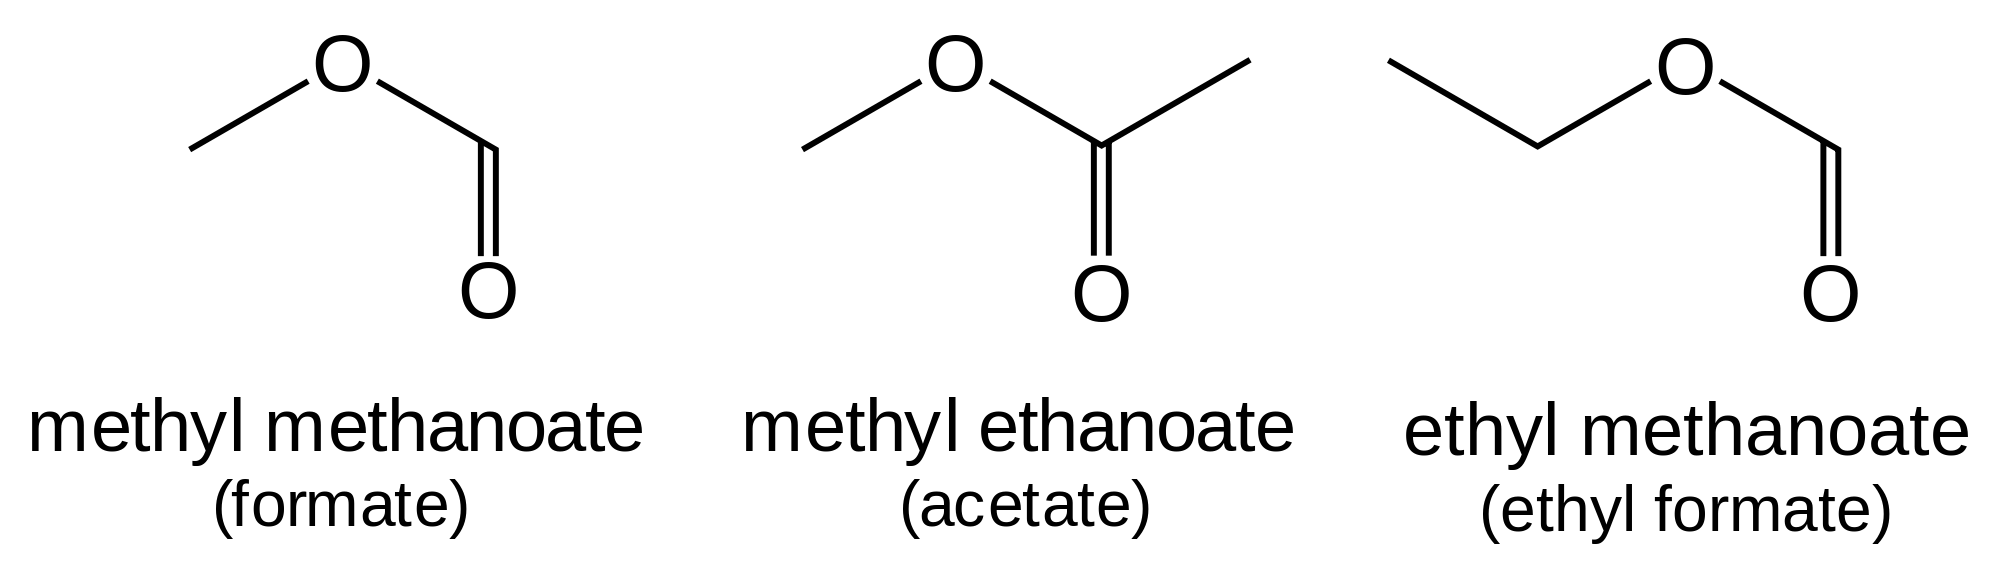 Ацетат анион. Ethyl methanoate. Hcooch3 структурная формула. Метилметаноат формула. Формиат этил